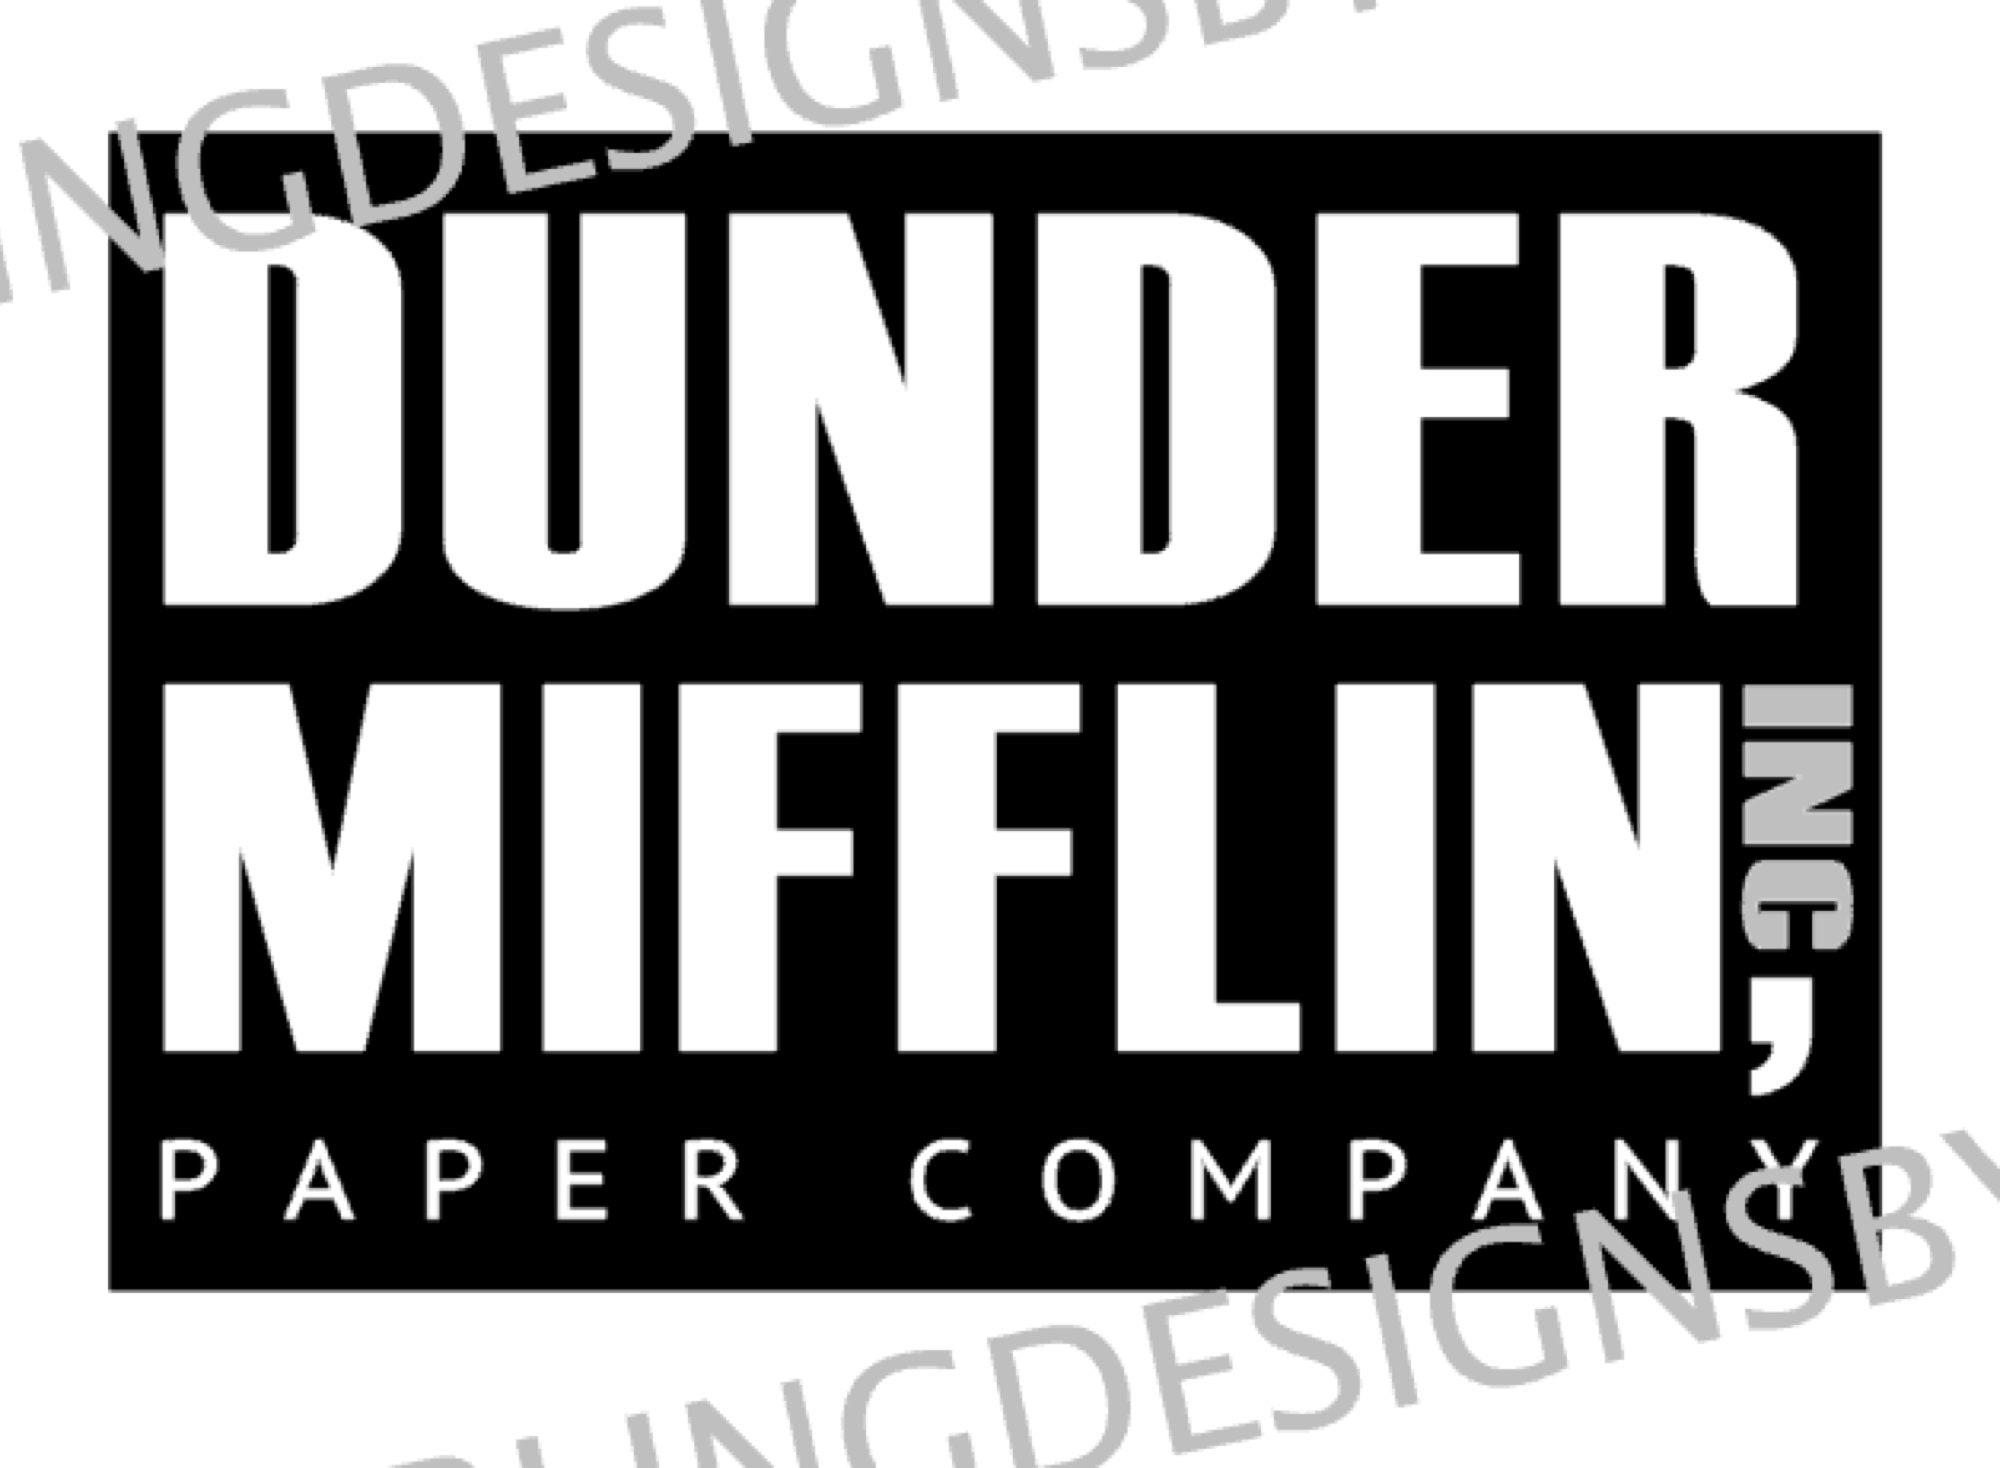 The Office - Dunder Mifflin Paper Company Logo - Black | Postcard